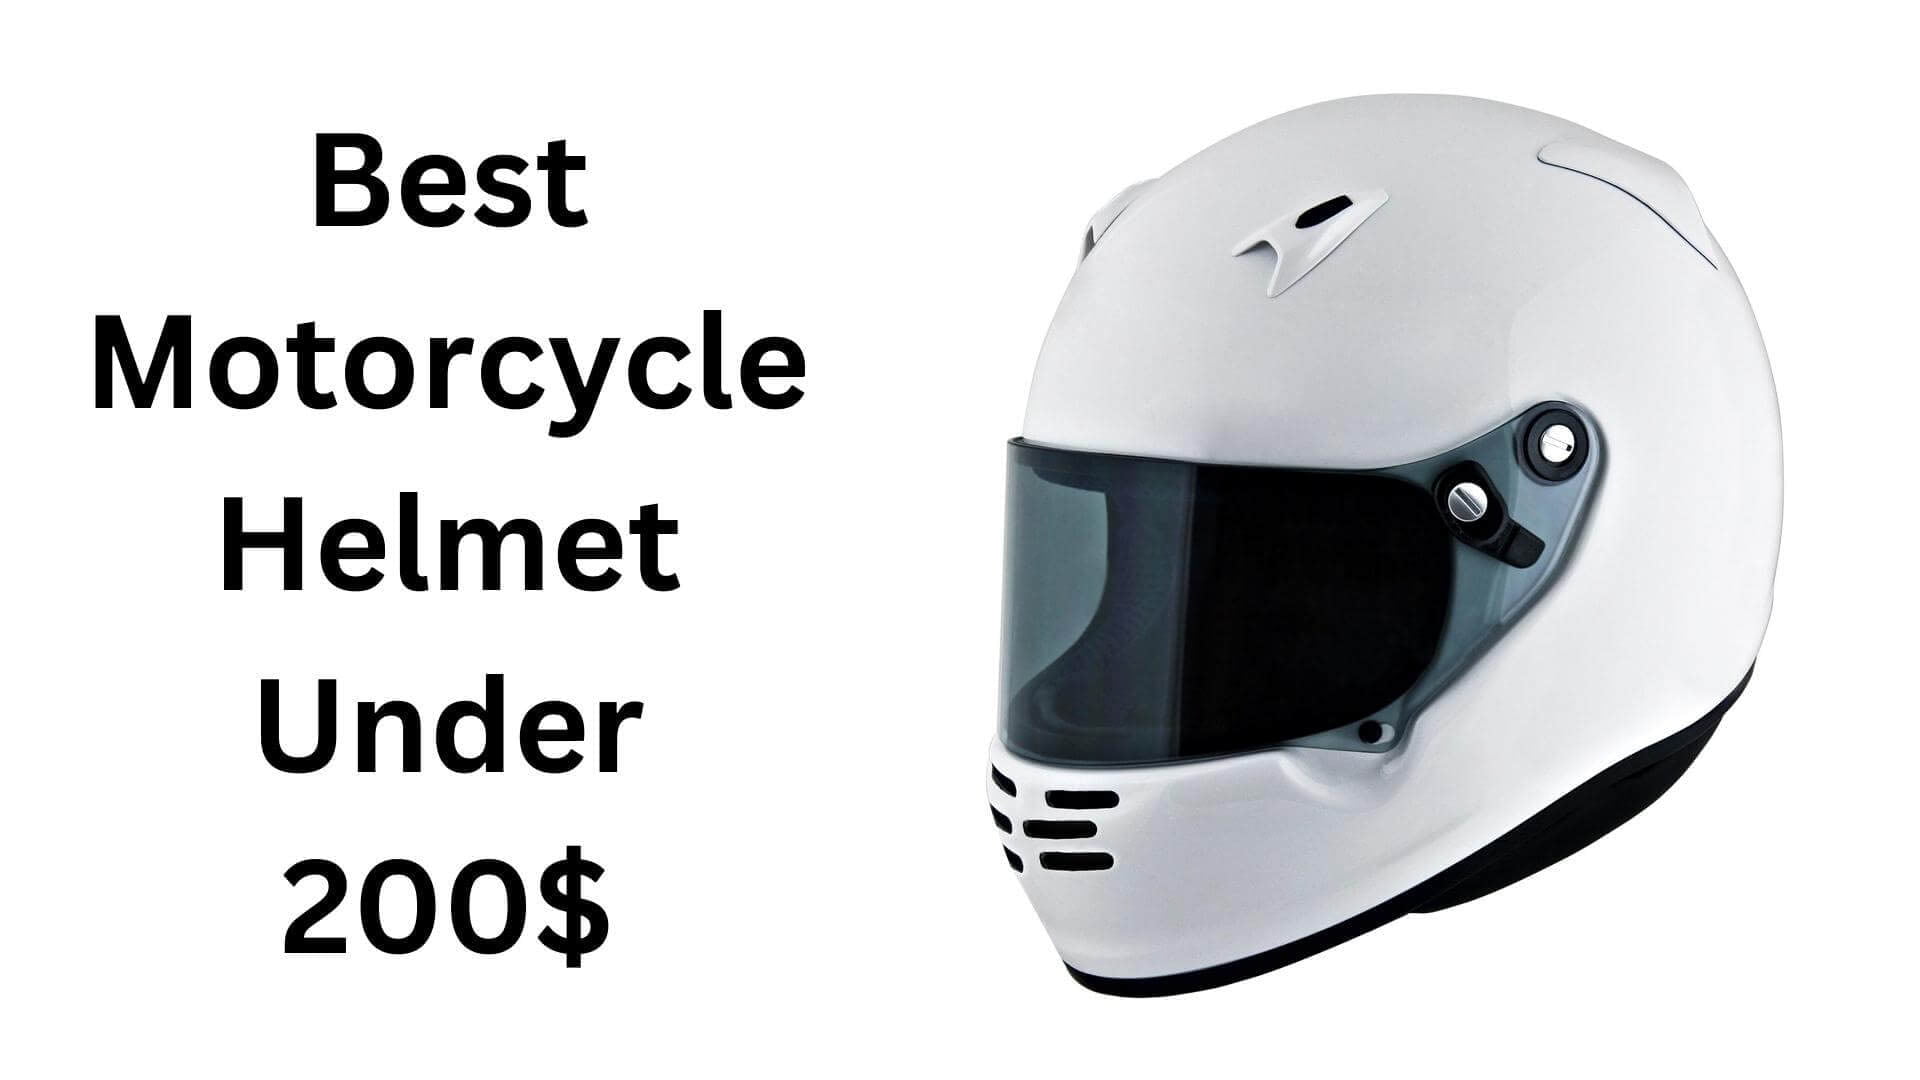 The Top 7 Best Motorcycle Helmet Under 200 Dollars